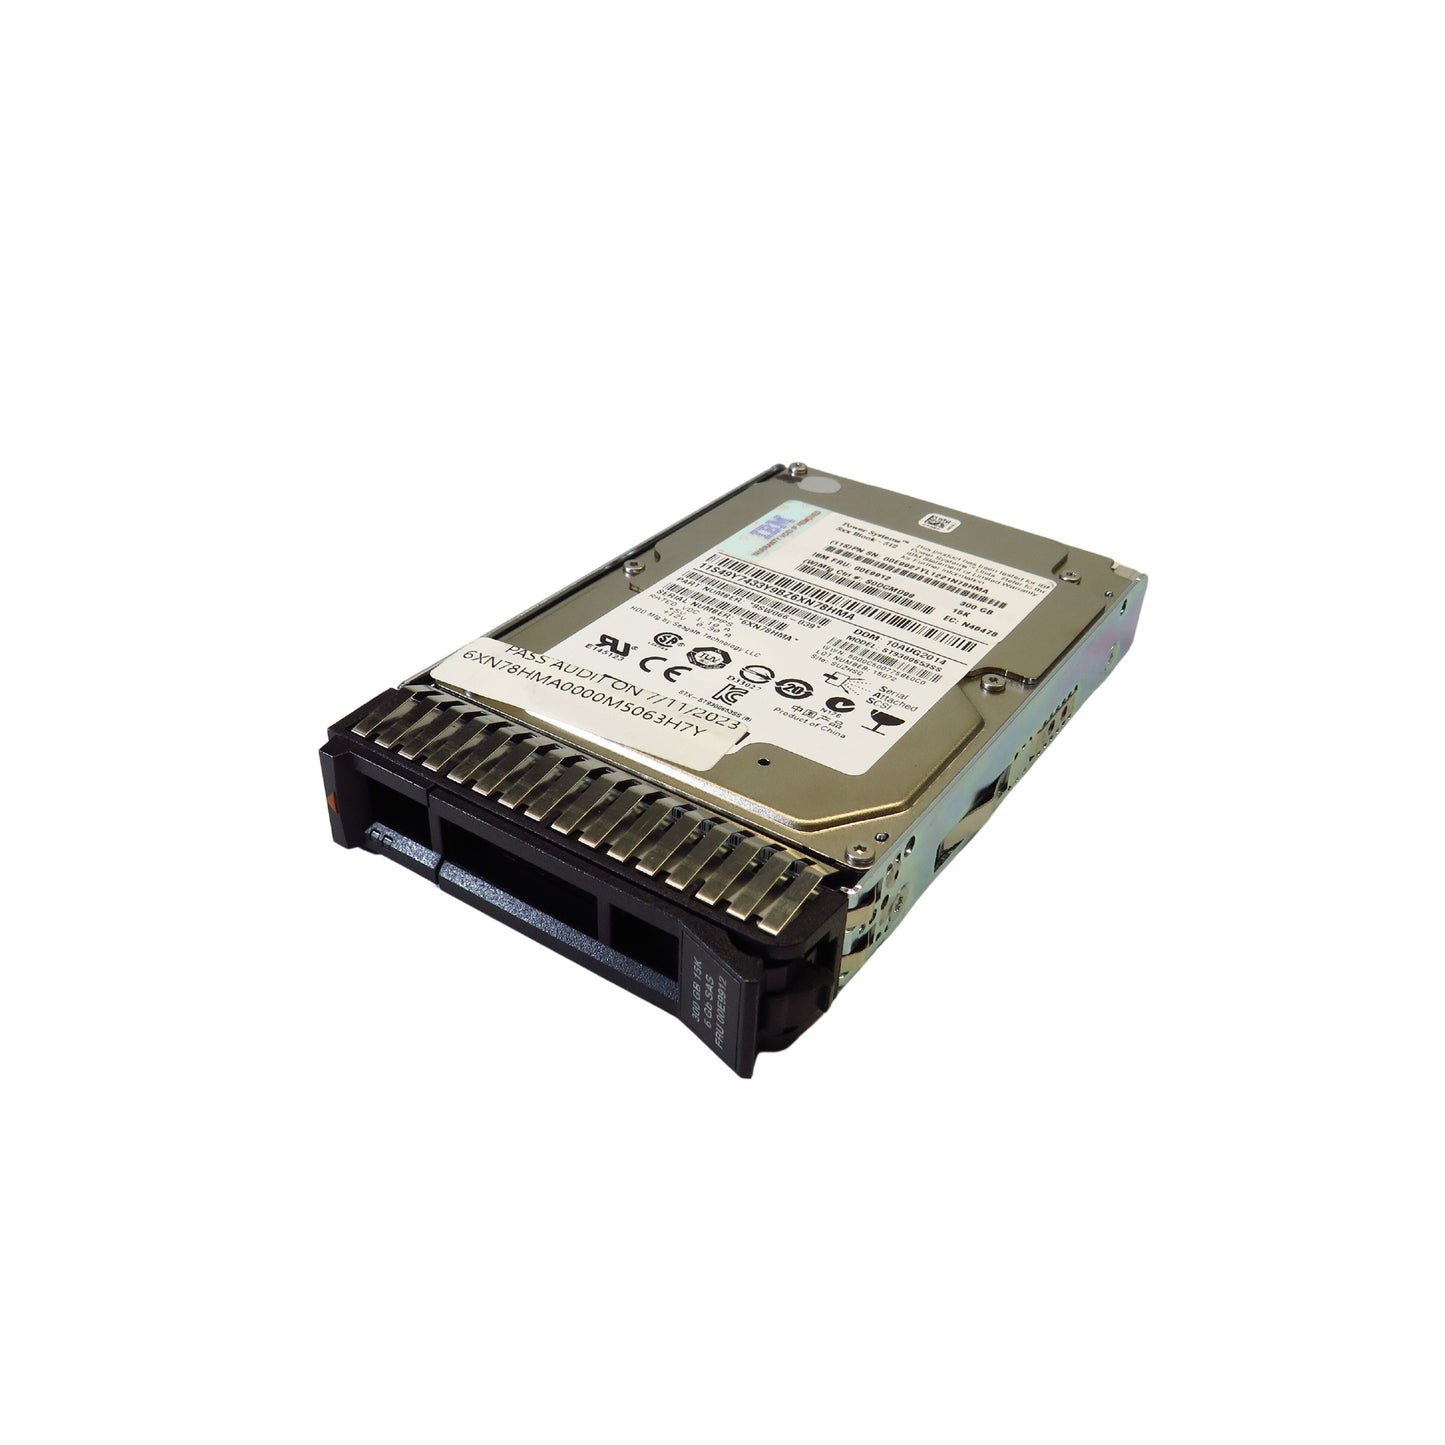 IBM 00E9912 59E0 300GB 15K RPM 2.5" SAS 6Gbps SFF HDD Hard Drive (Refurbished)